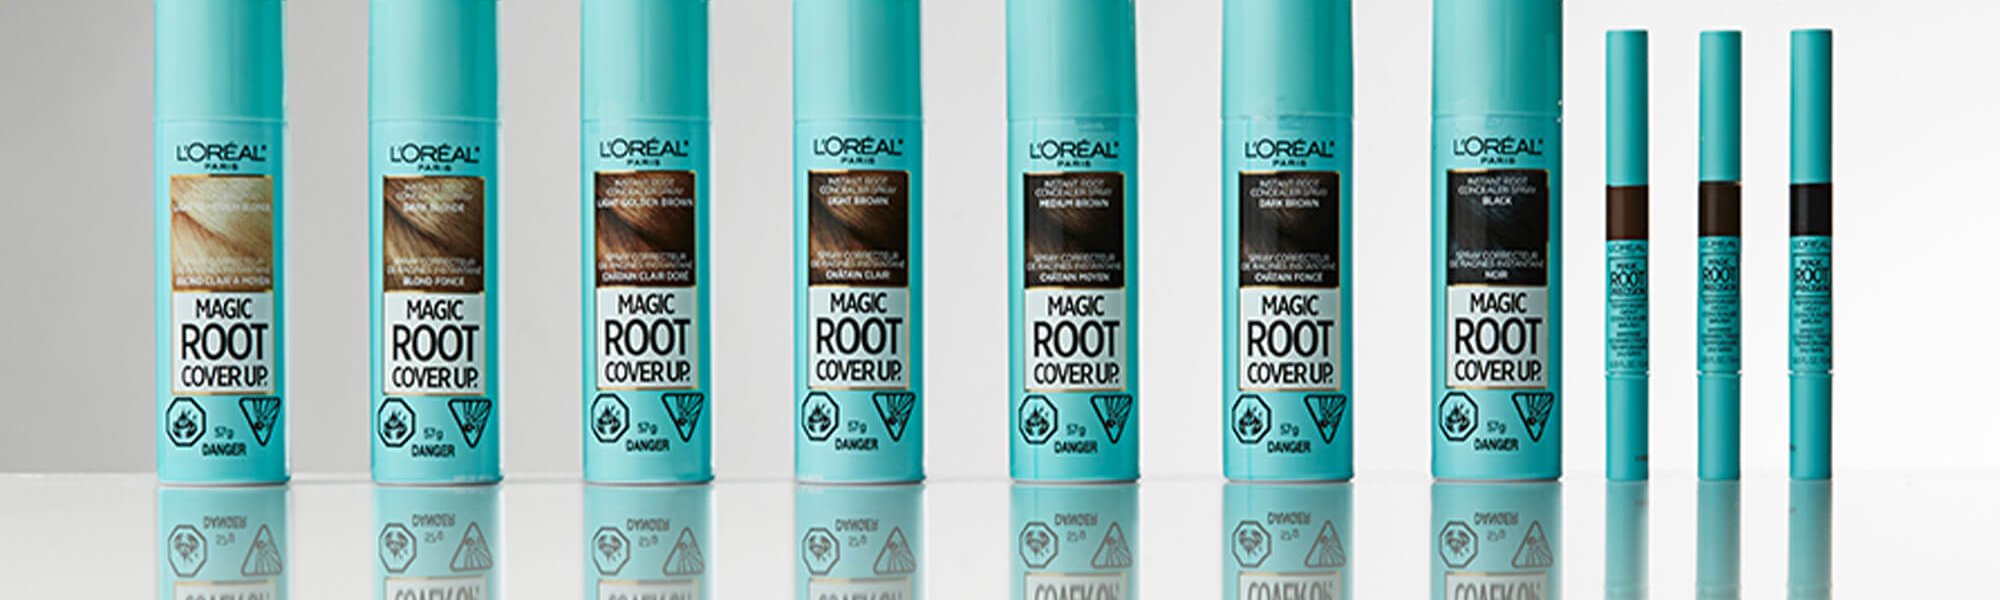 Quick Fix : The Five-Minute Guide To Covering Your Roots | L'Oréal Paris